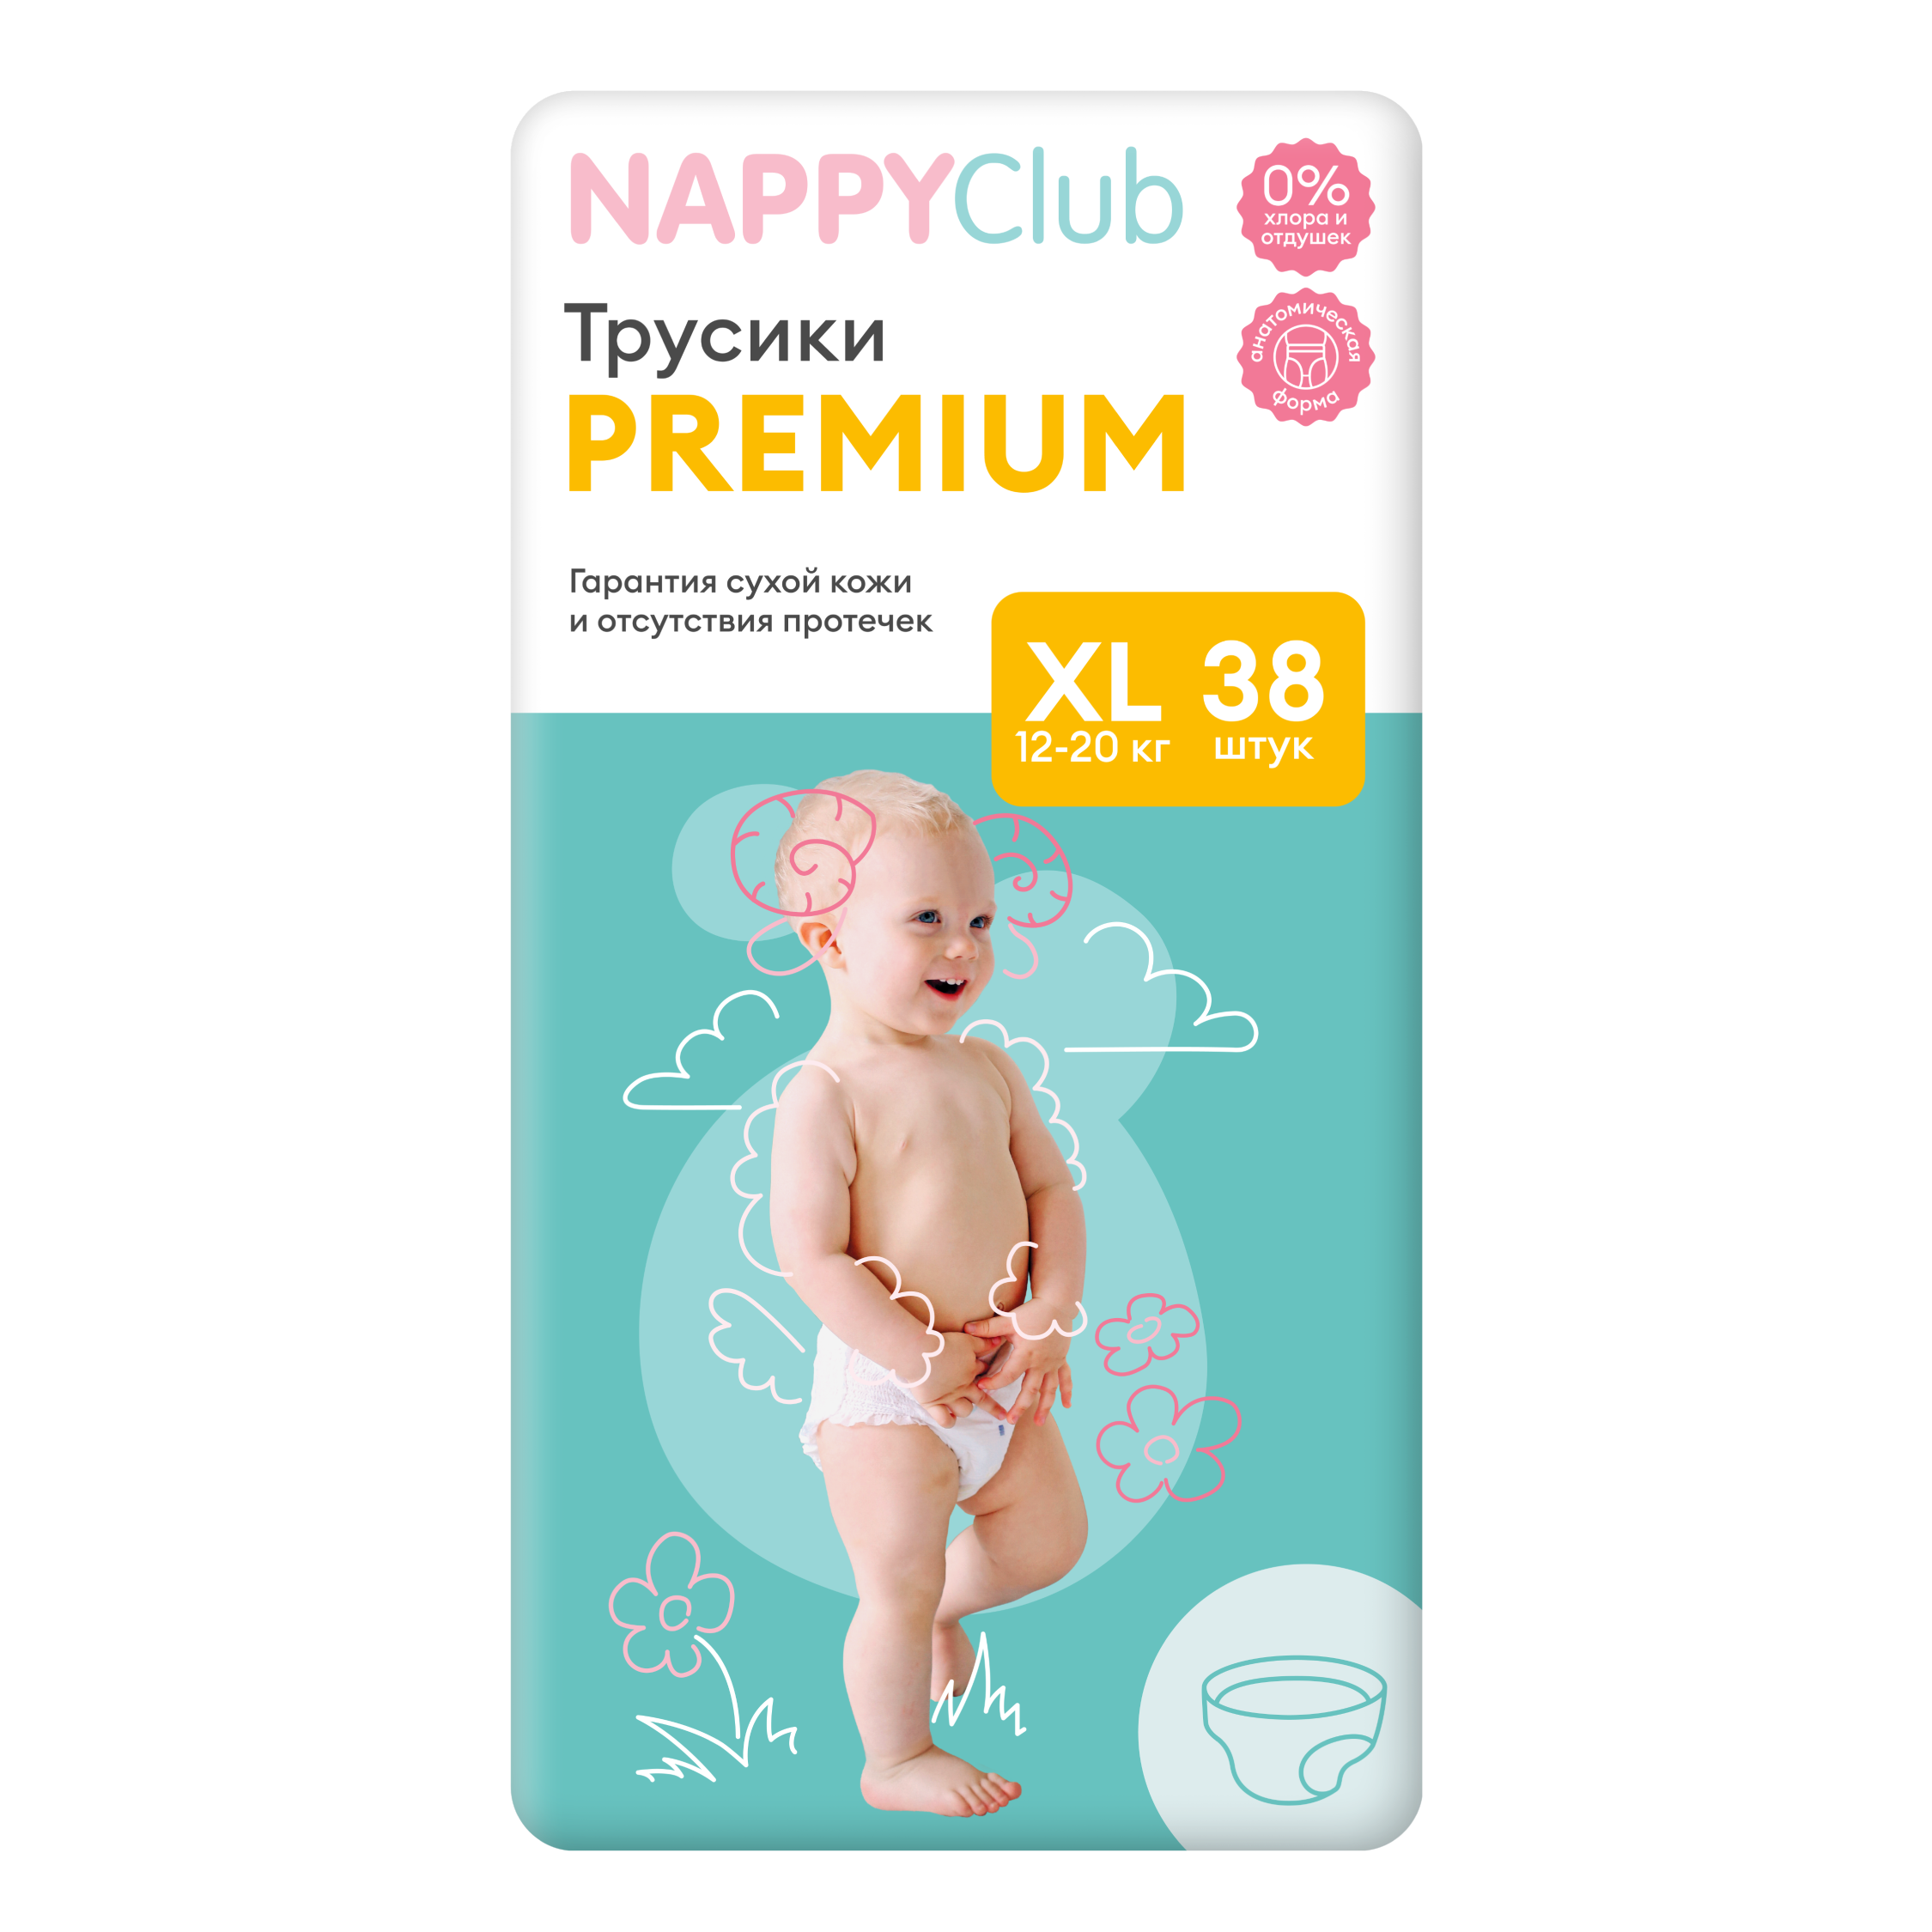 NappyClub трусики Premium XL (12-20 кг) 38 шт.